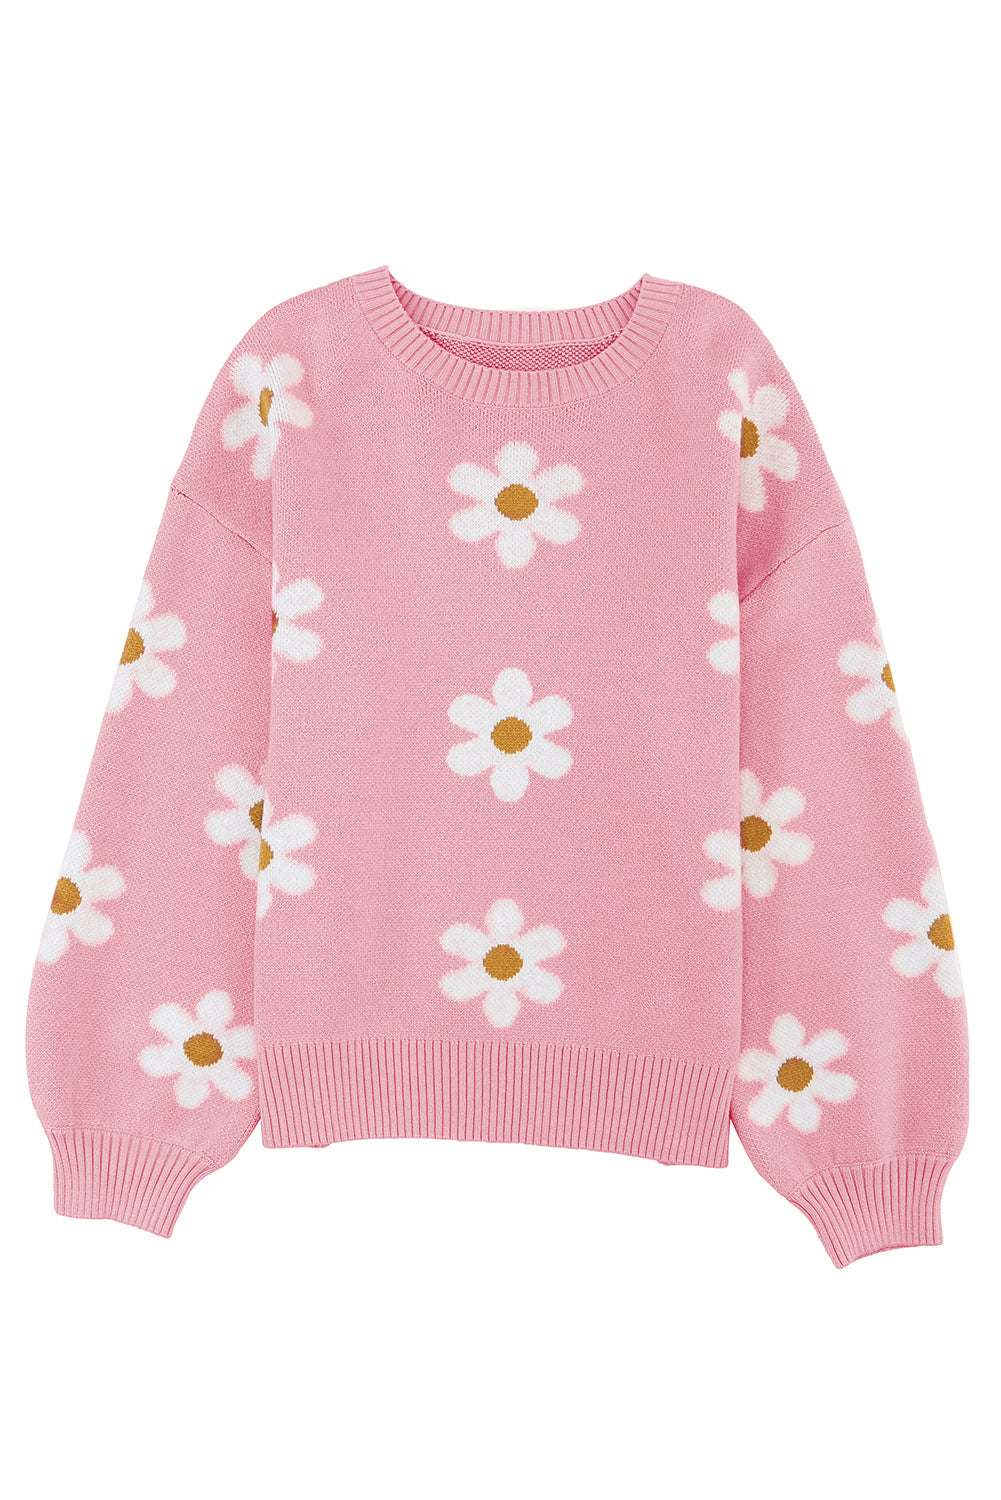 lennon flowr sweater - pink/black